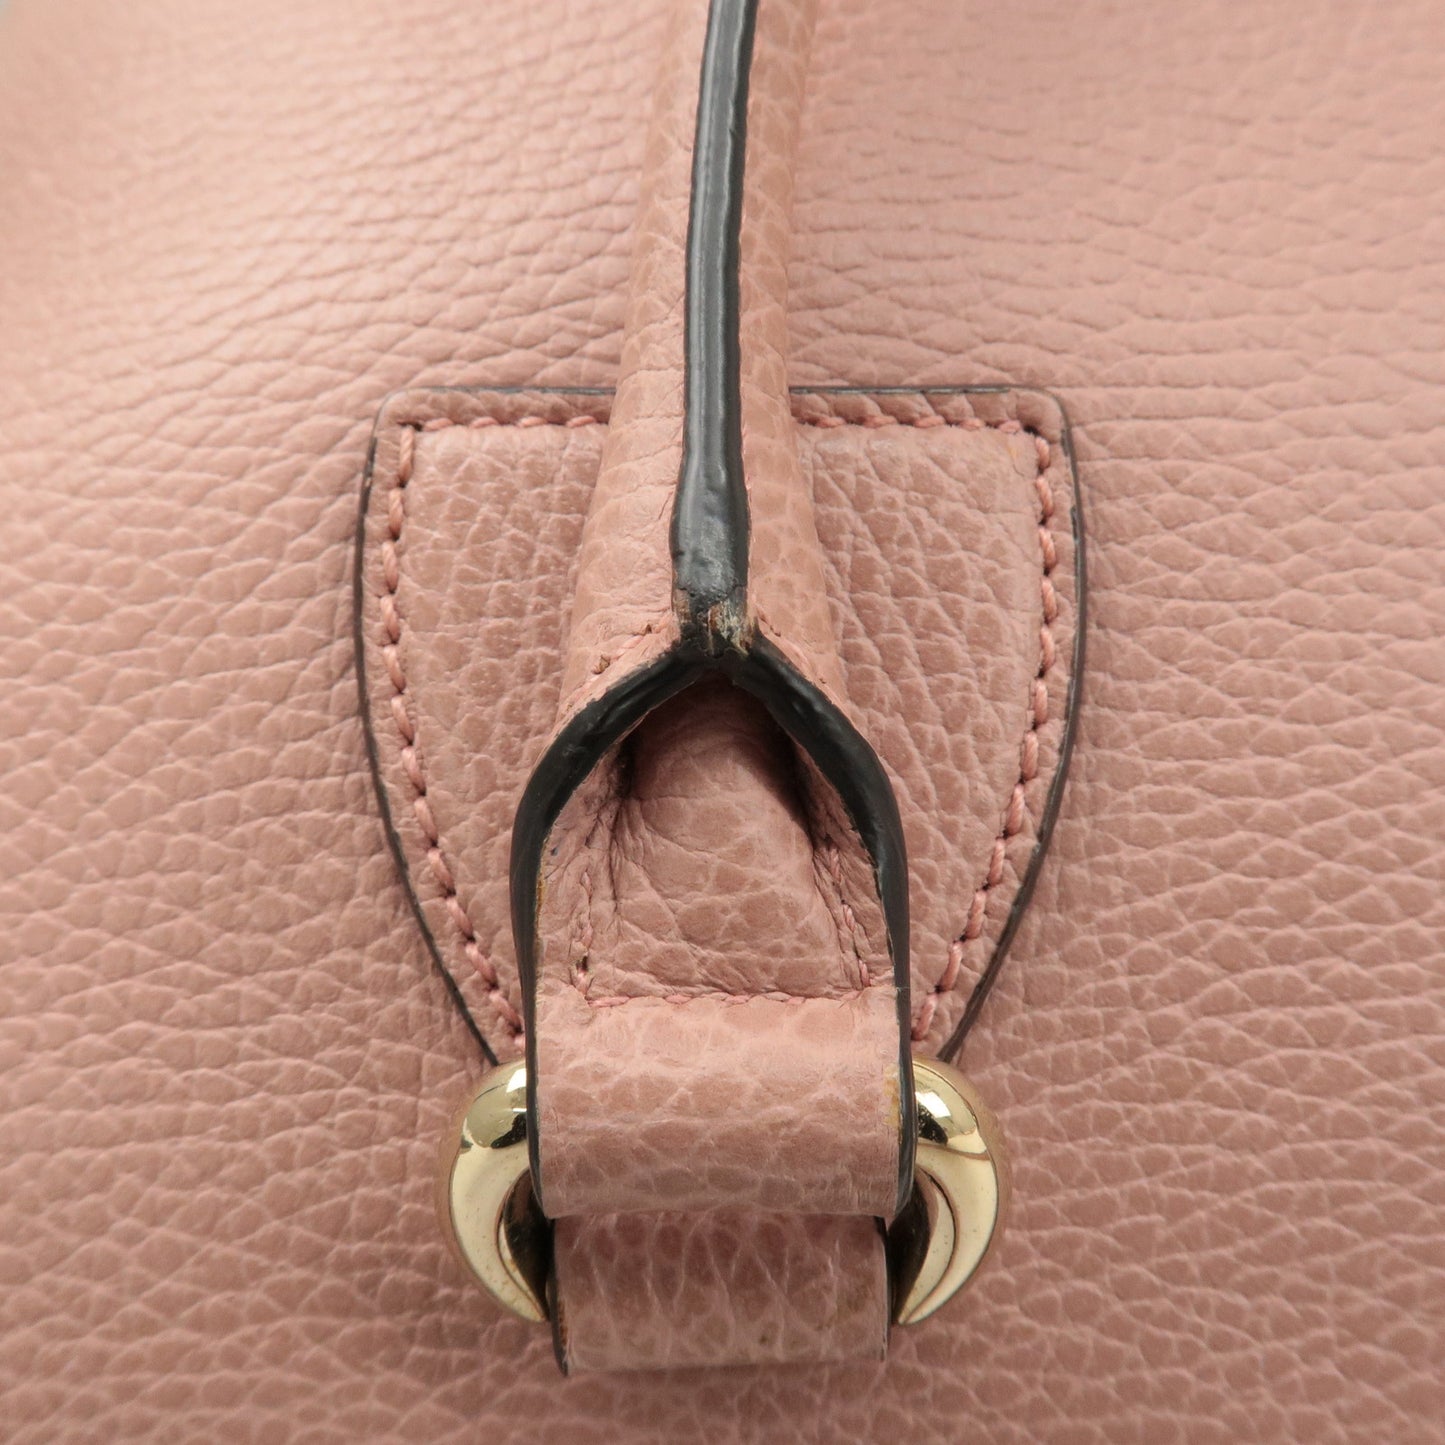 GUCCI Interlocking G Leather 2WAY Tote Bag Pink 449659